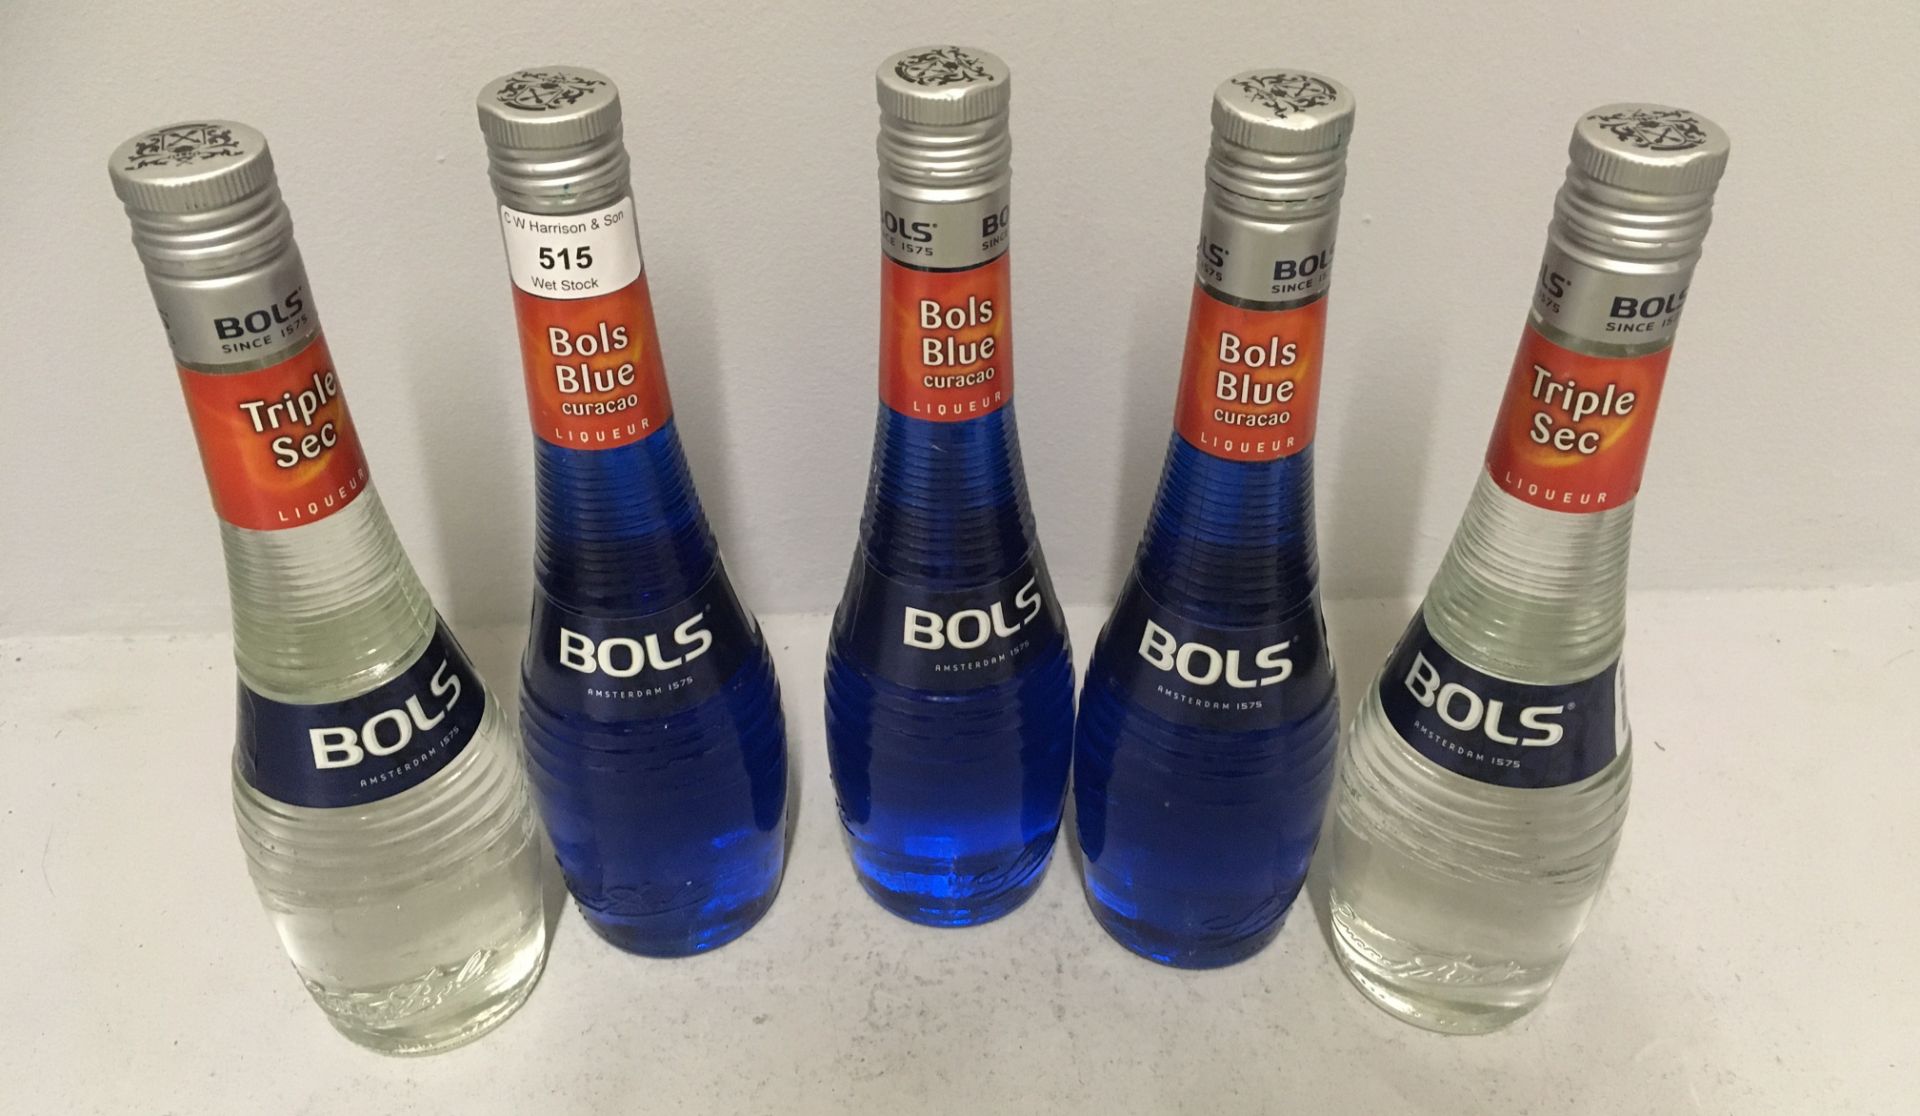 5 x items - 3 x 500ml bottles of Bols Blue Curacao liqueur and 2 x 500ml bottles of Bols Triple Sec